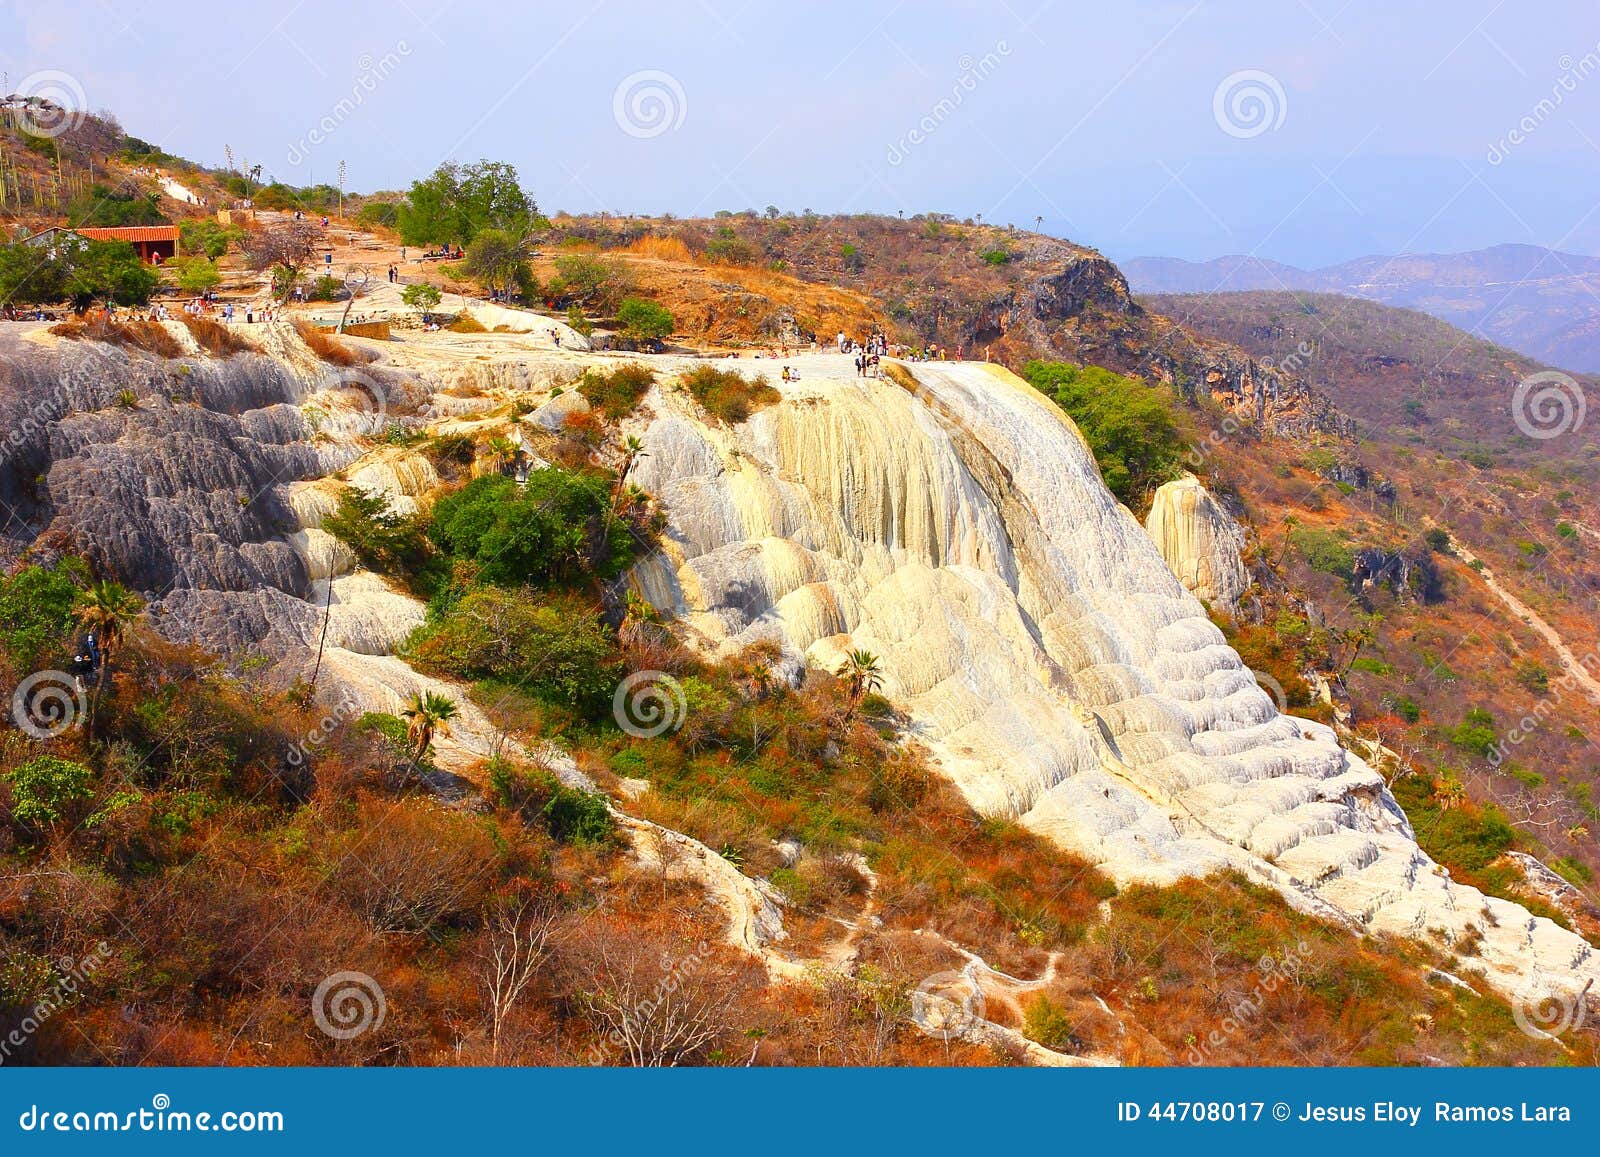 hierve el agua, petrified waterfall in oaxaca iv